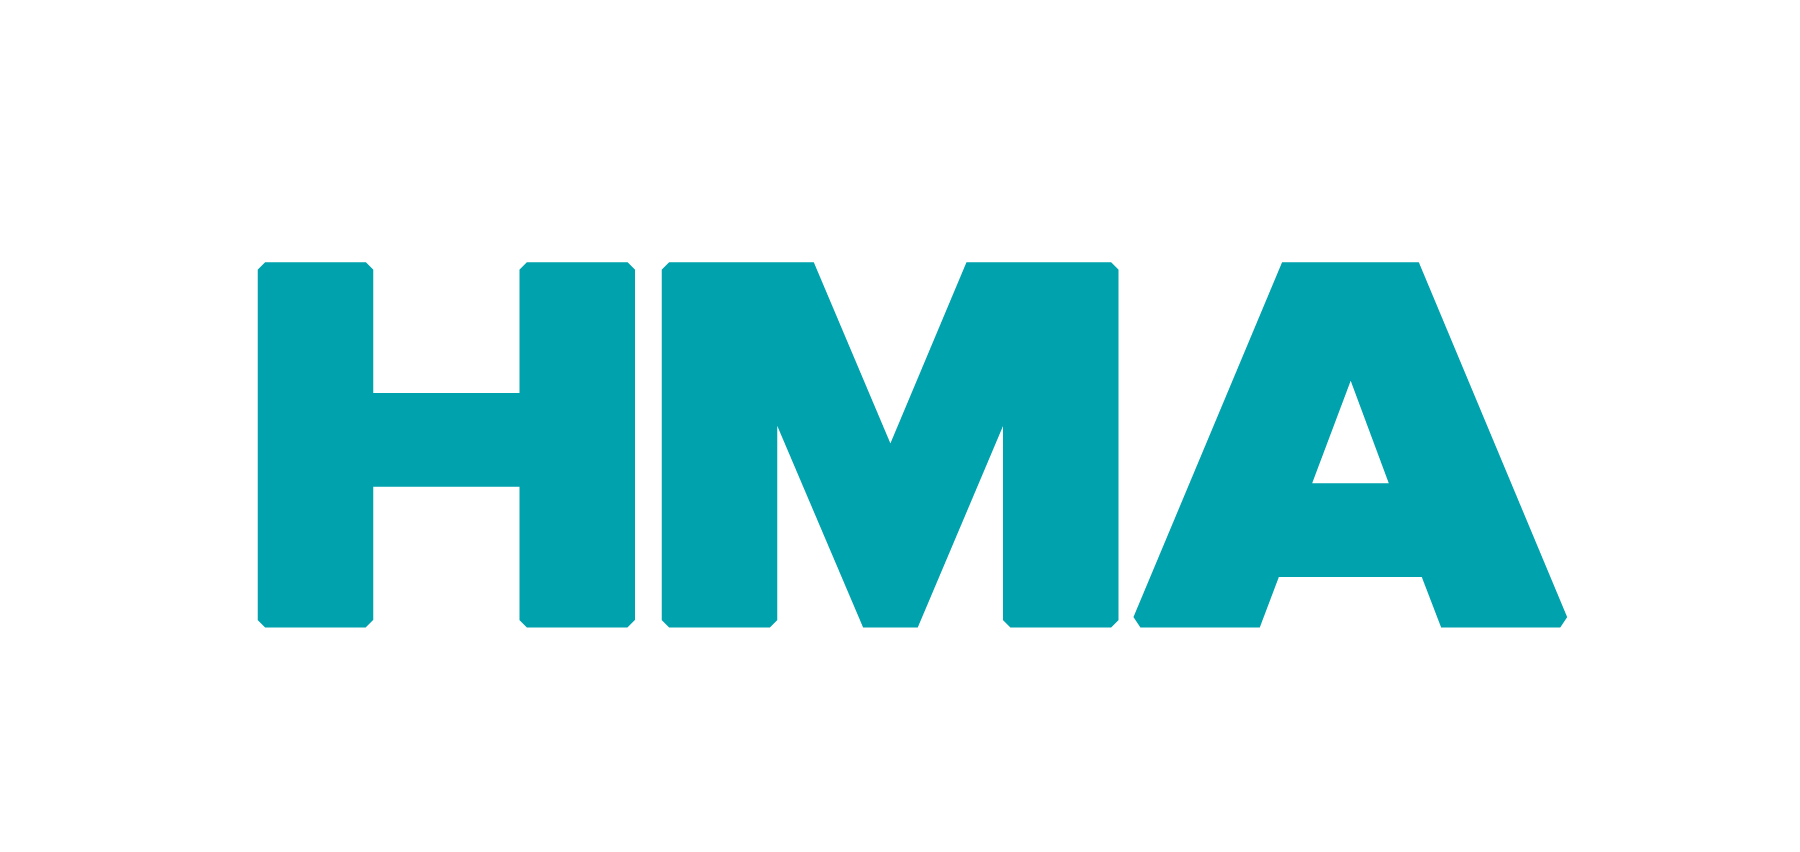 Healthcare Management Administrators (HMA)